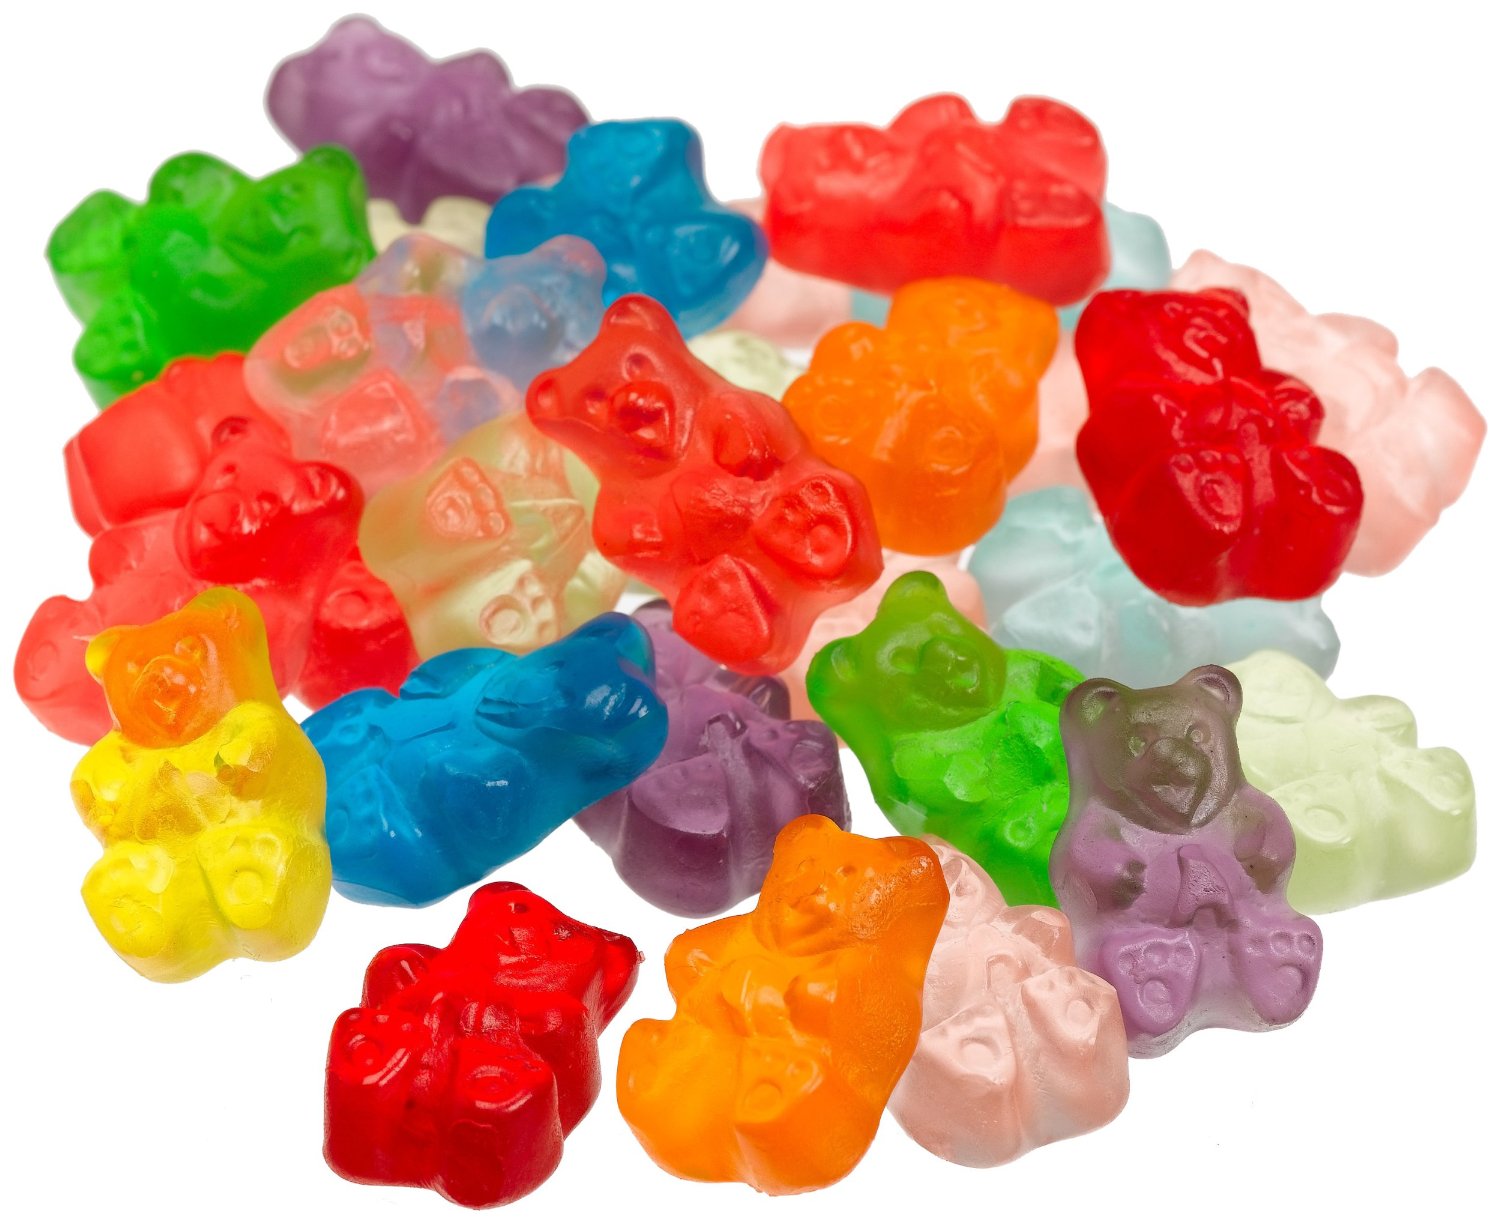 Gummi Bears Sugar Free